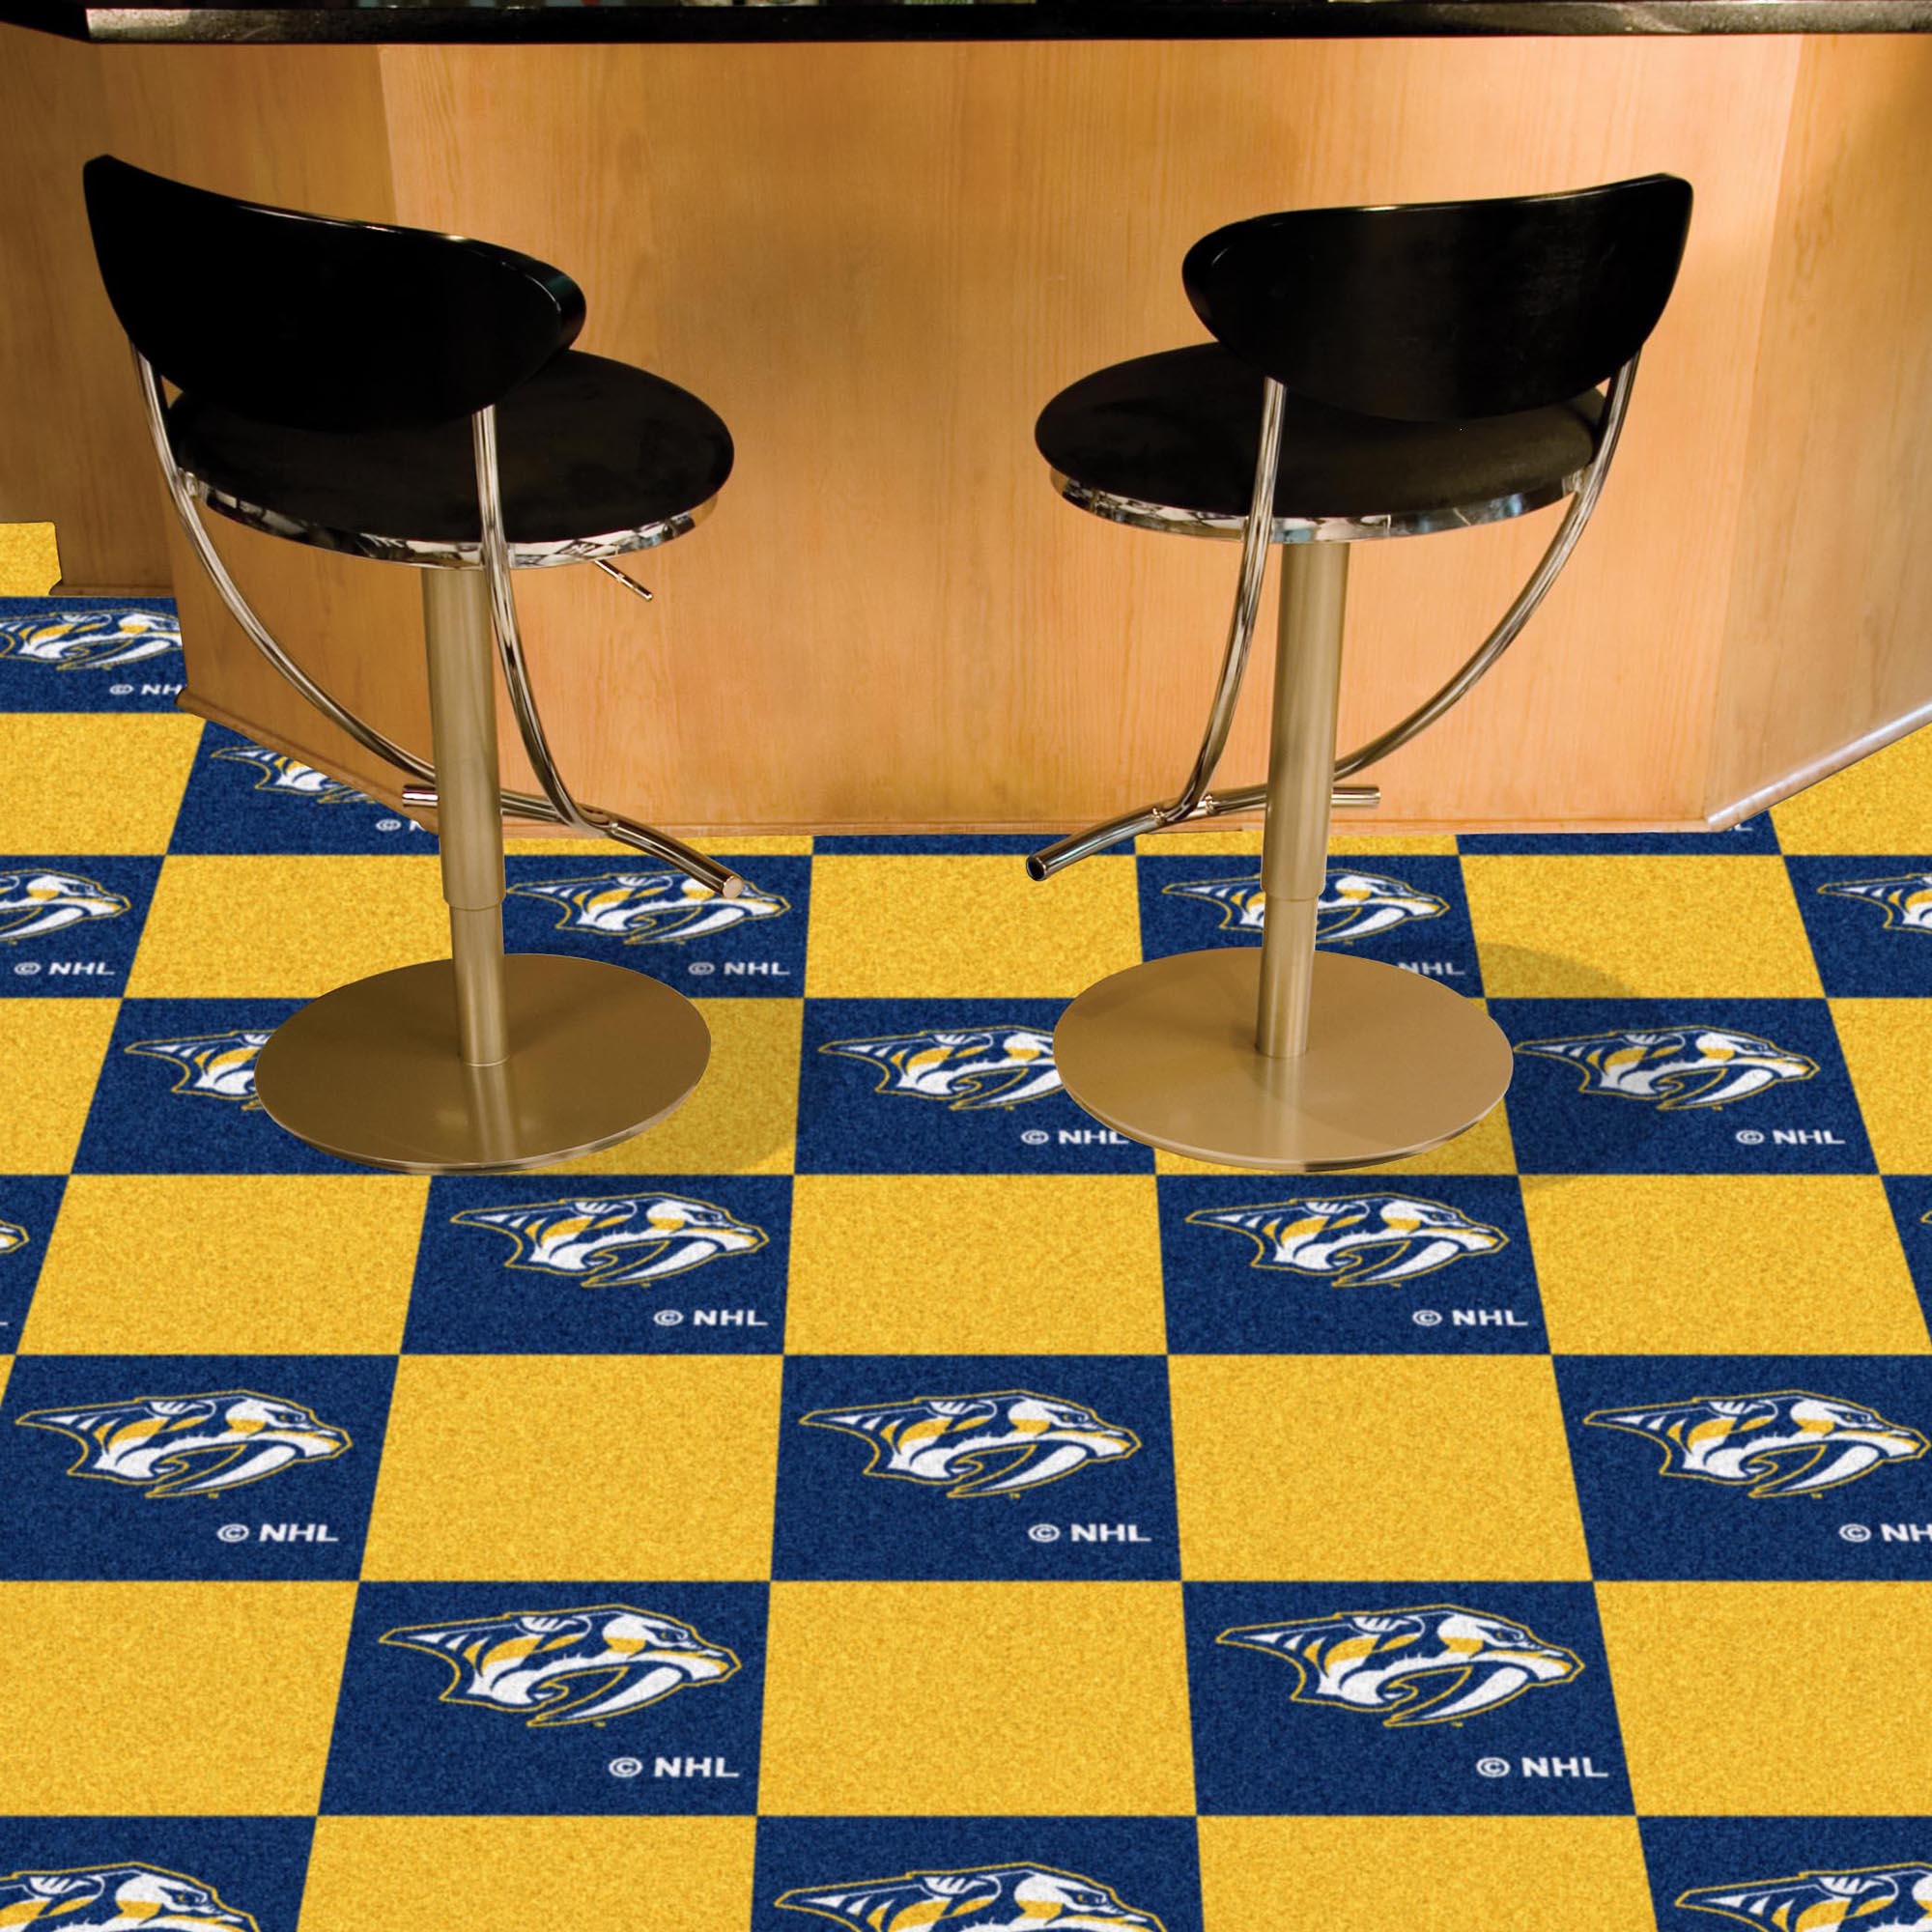 Nashville Predators Blue Team Carpet Tiles - 45 sq ft